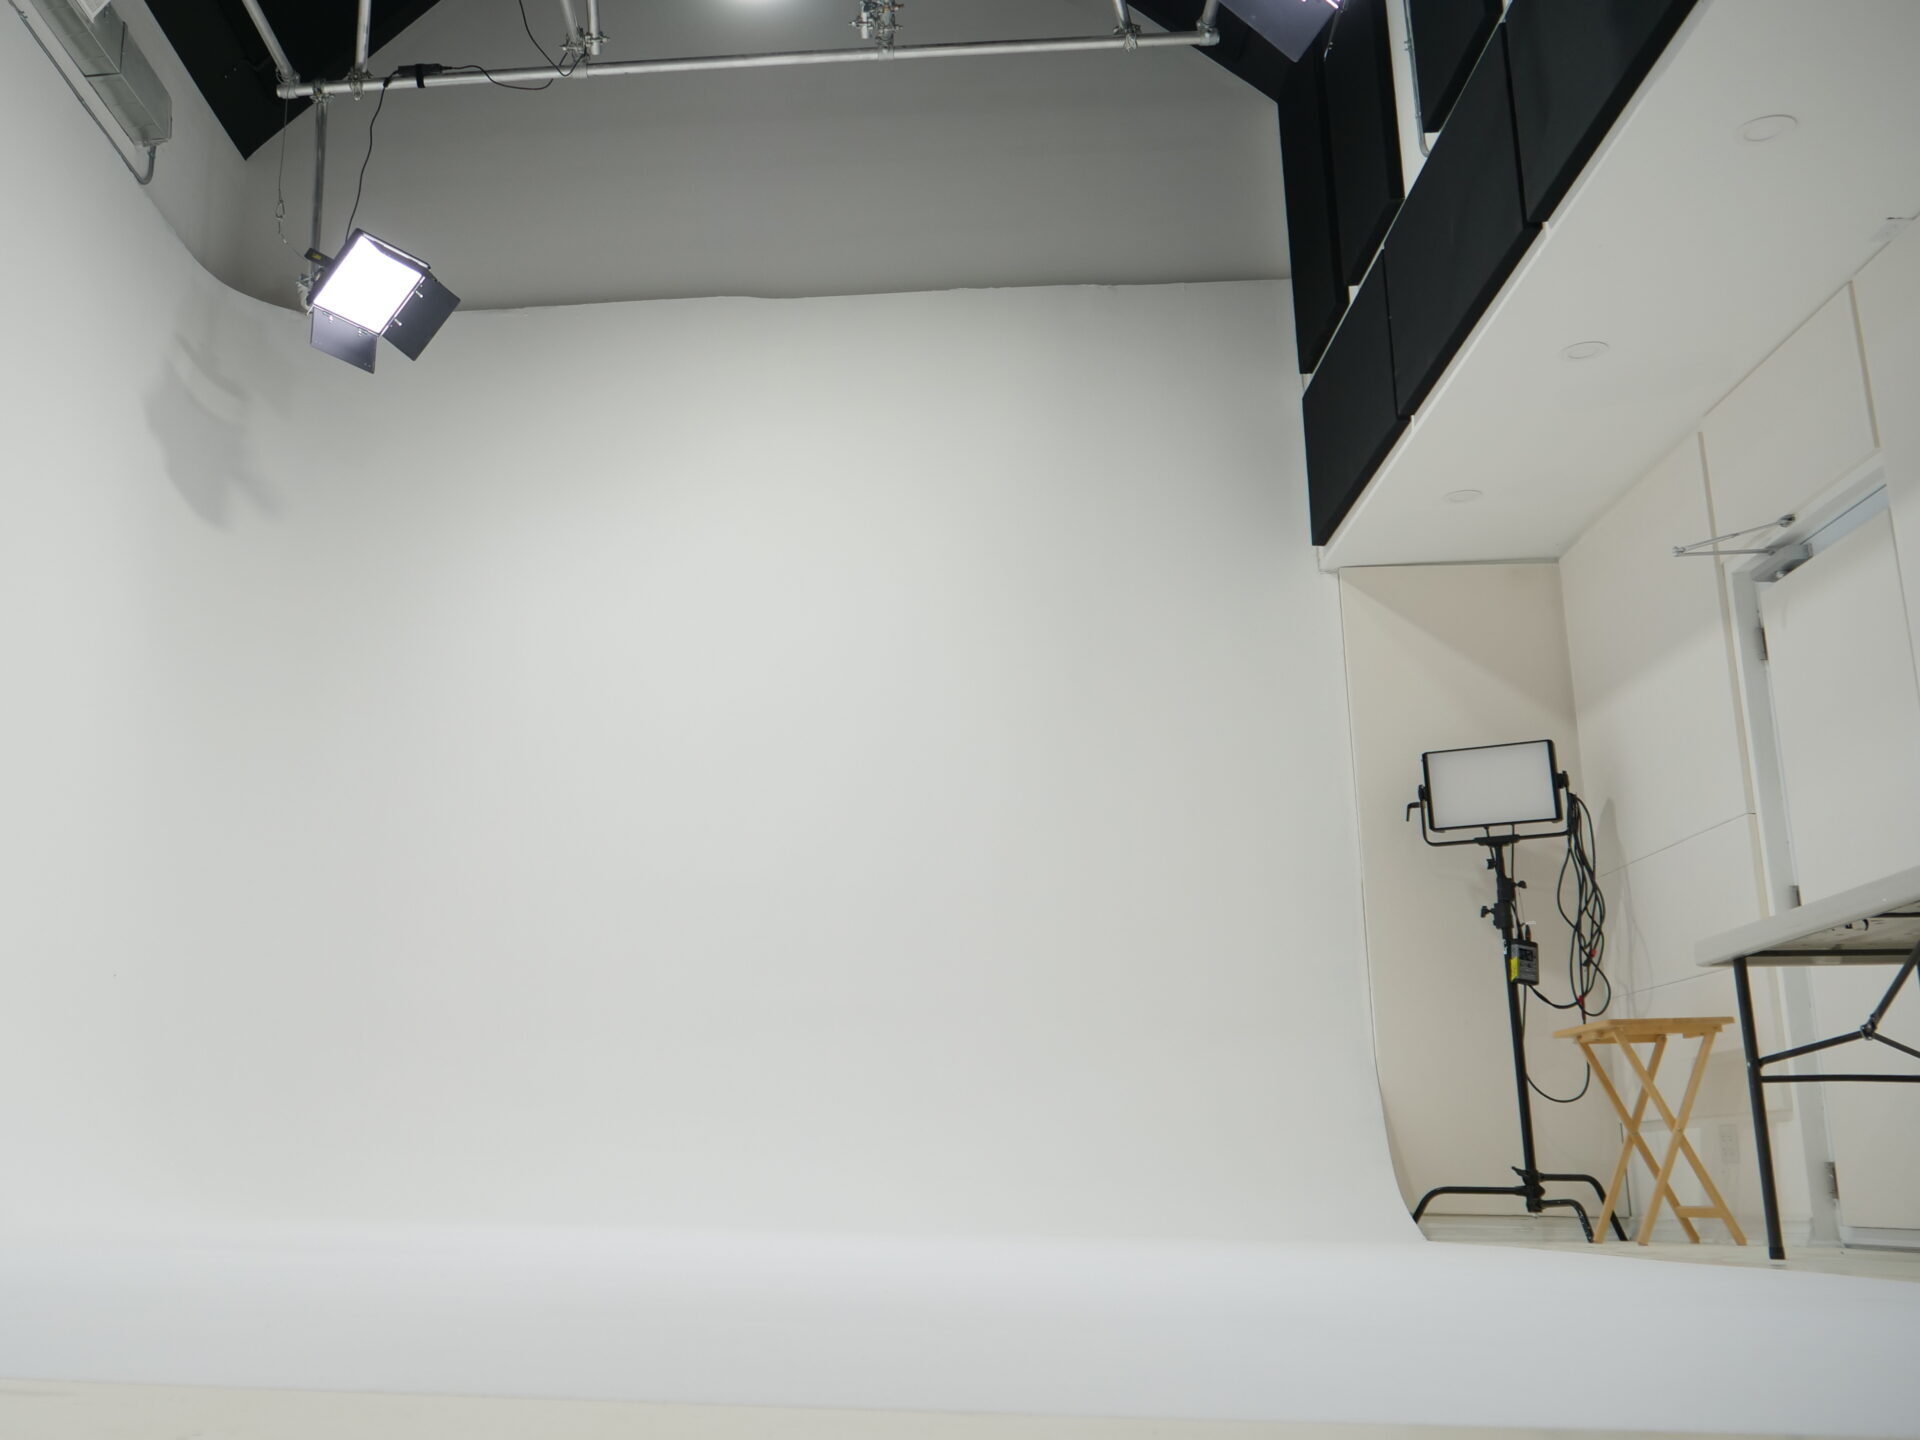 Film studio rental with white cyc wall at Genie Lamp Studios Markham.